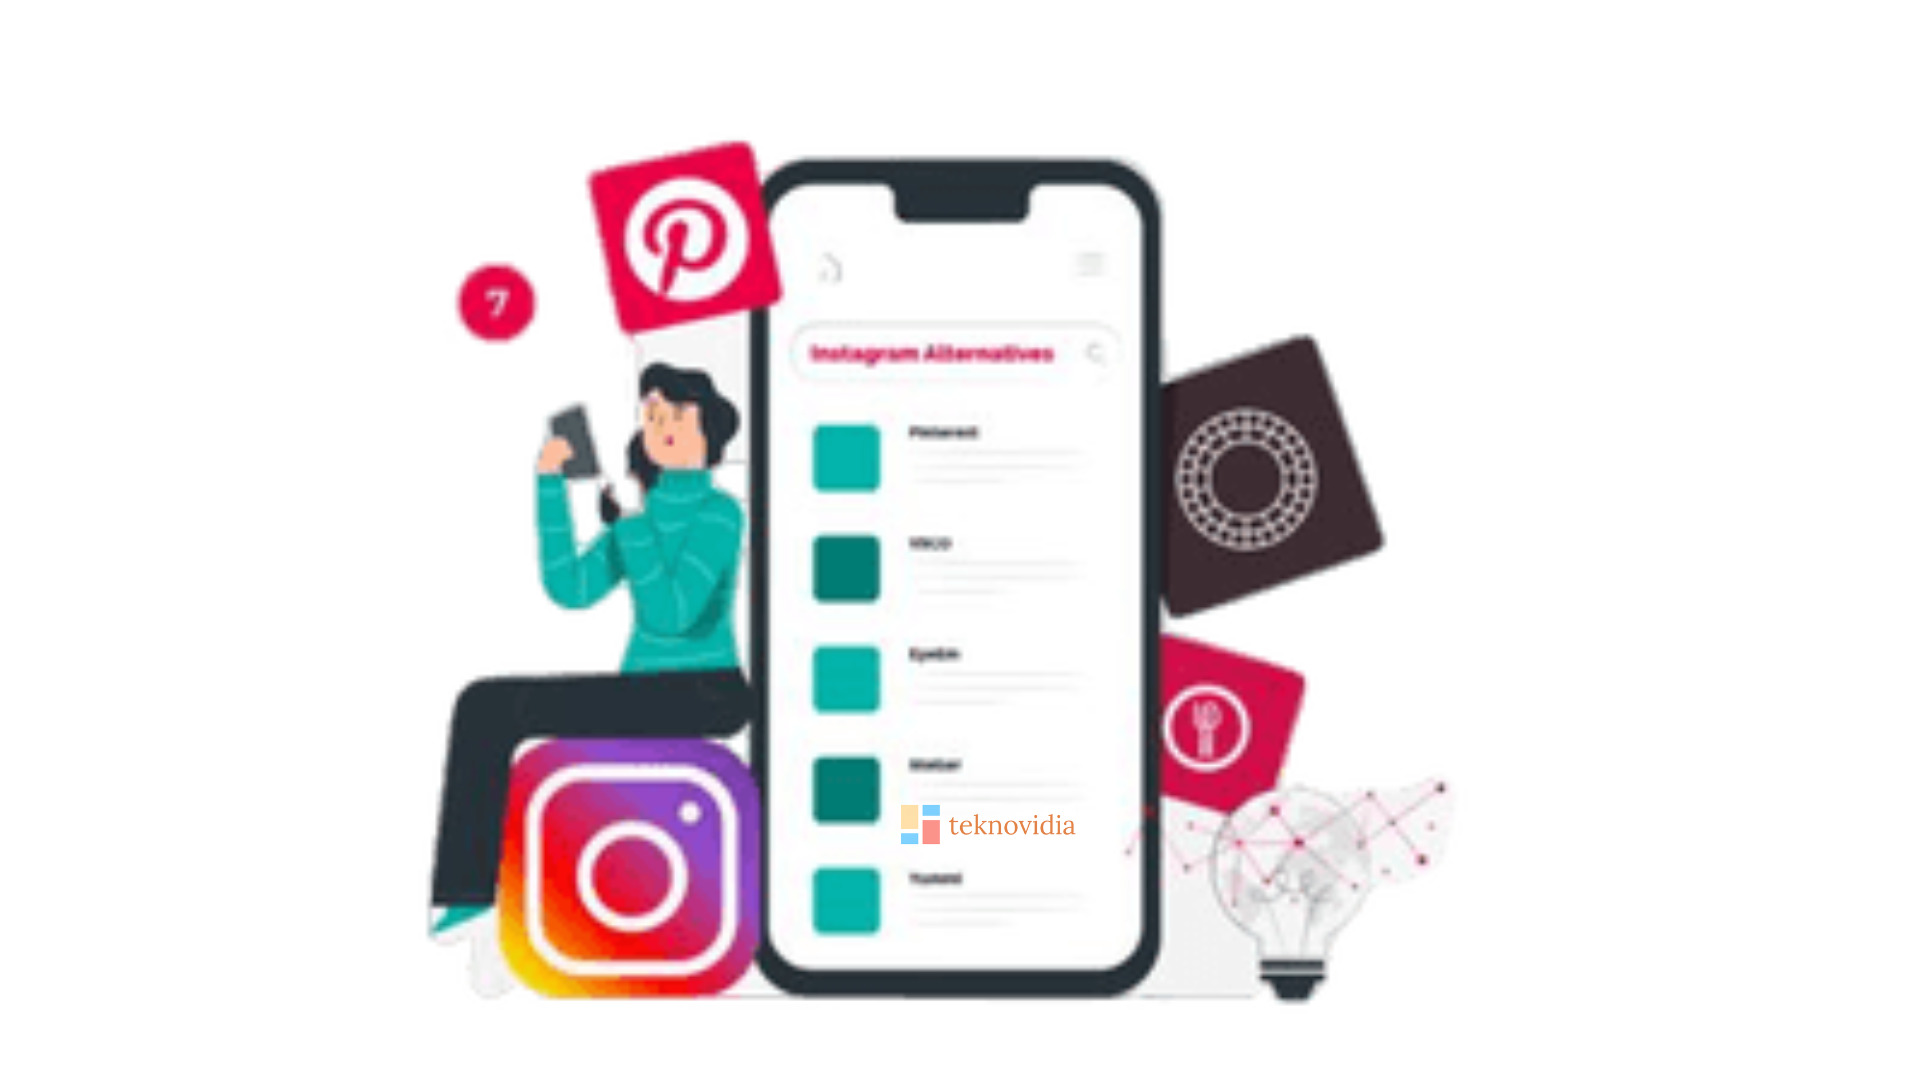 Daftar 8 Aplikasi Alternatif Instagram, Wajib Coba!